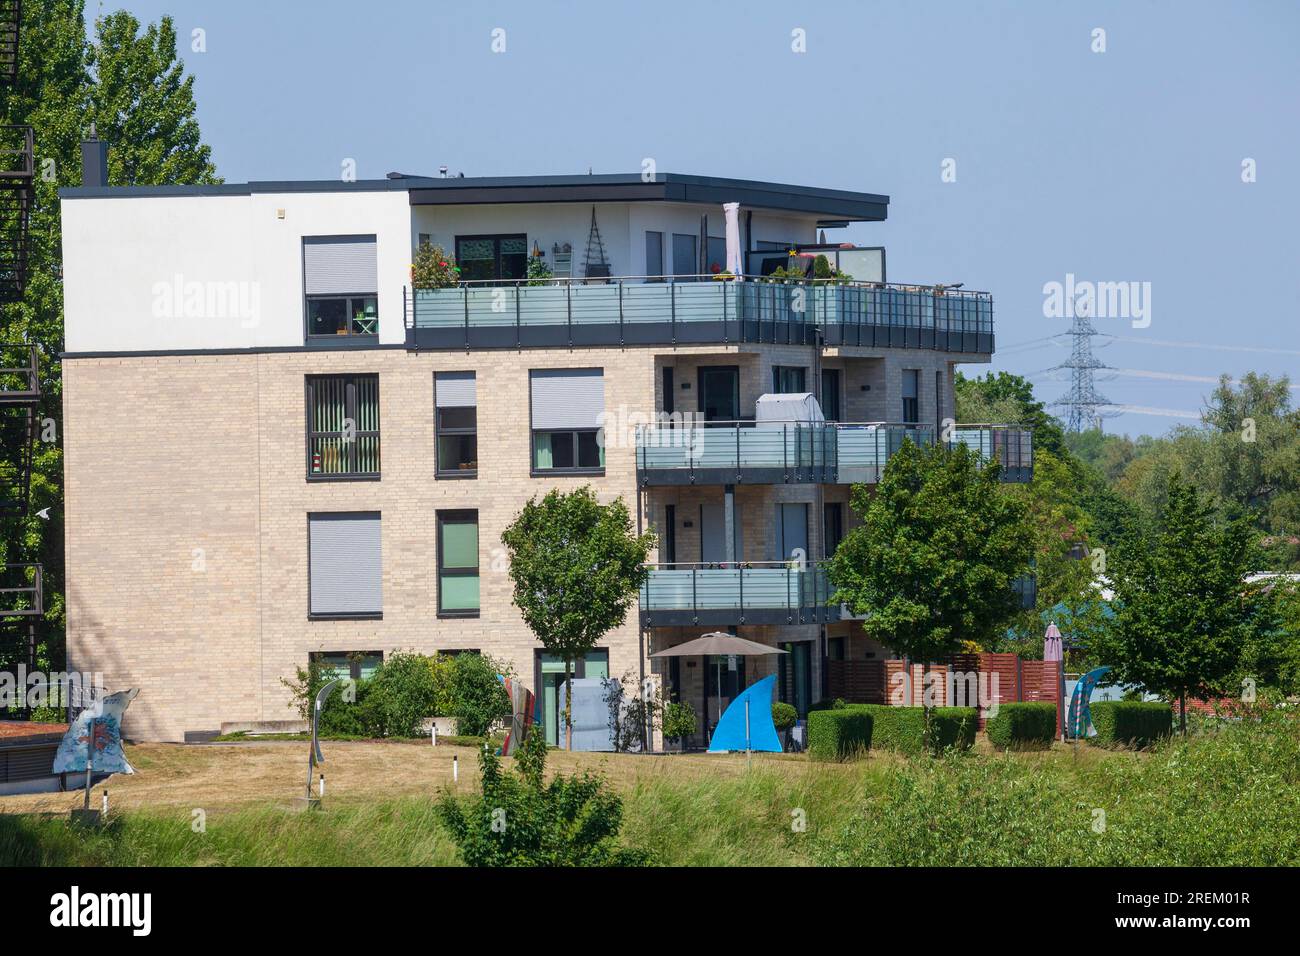 Casa residencia moderna, casa multifamiliar, edificio residencial, Stade, Baja Sajonia, Alemania Foto de stock